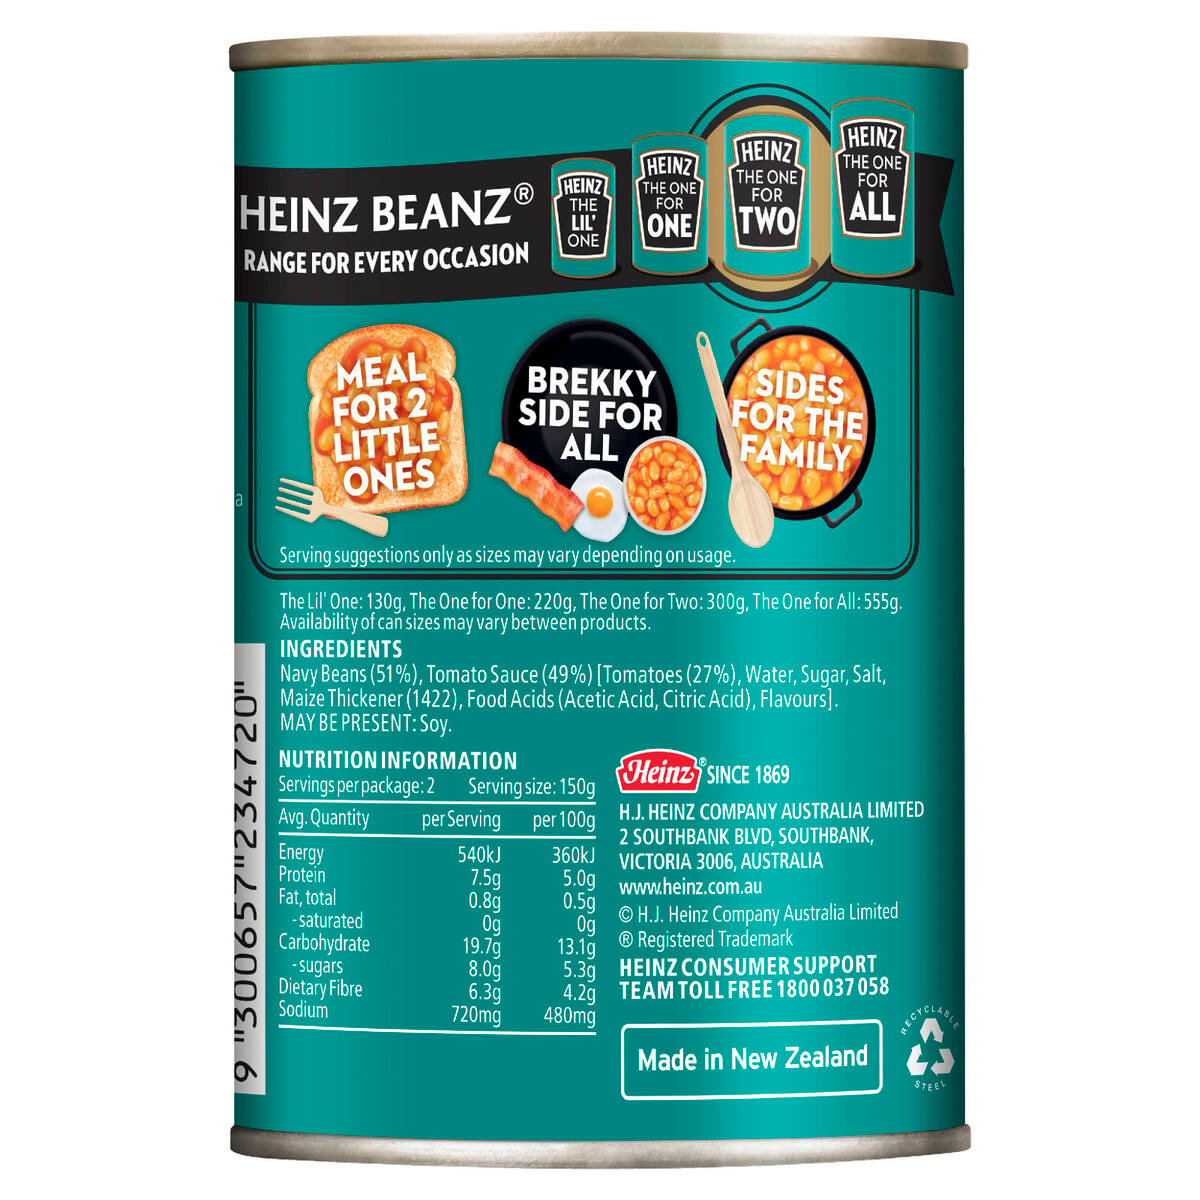 Heinz Beanz English Recipe 300 g